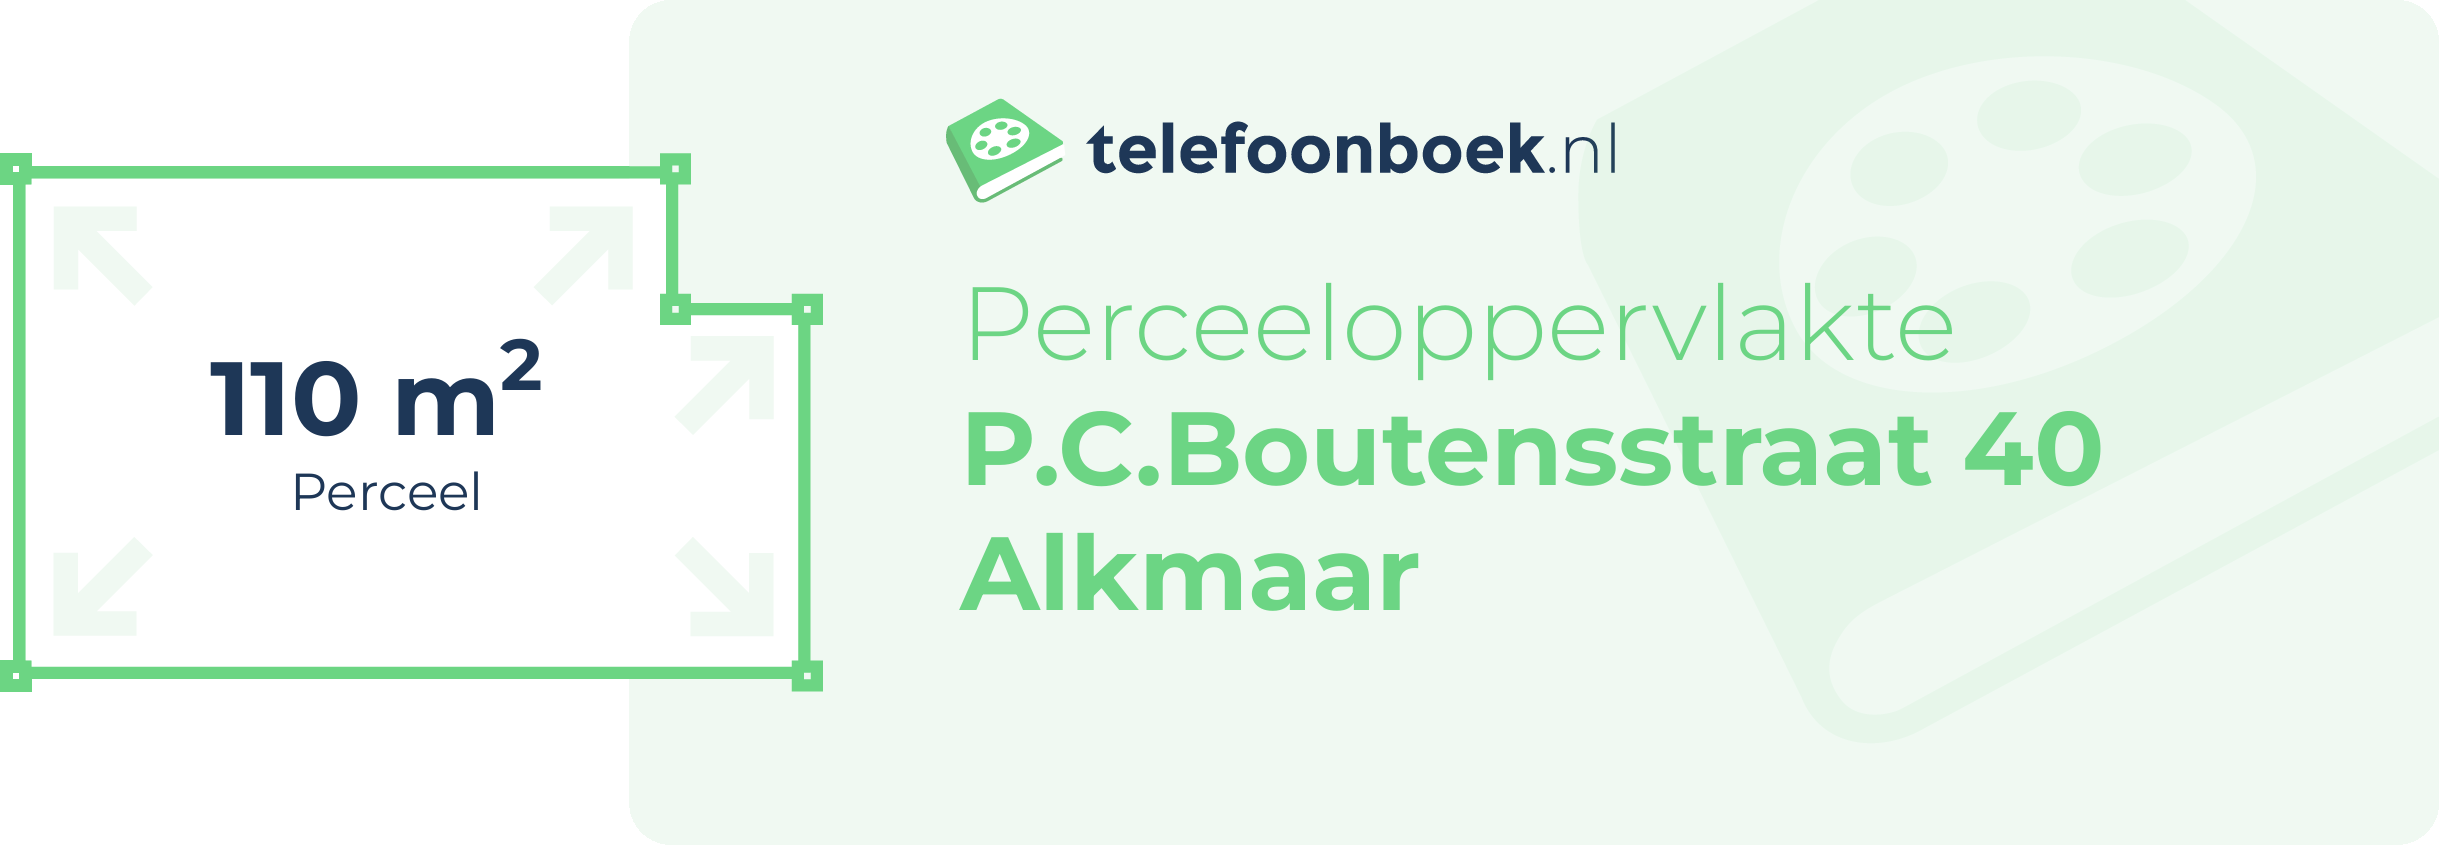 Perceeloppervlakte P.C.Boutensstraat 40 Alkmaar